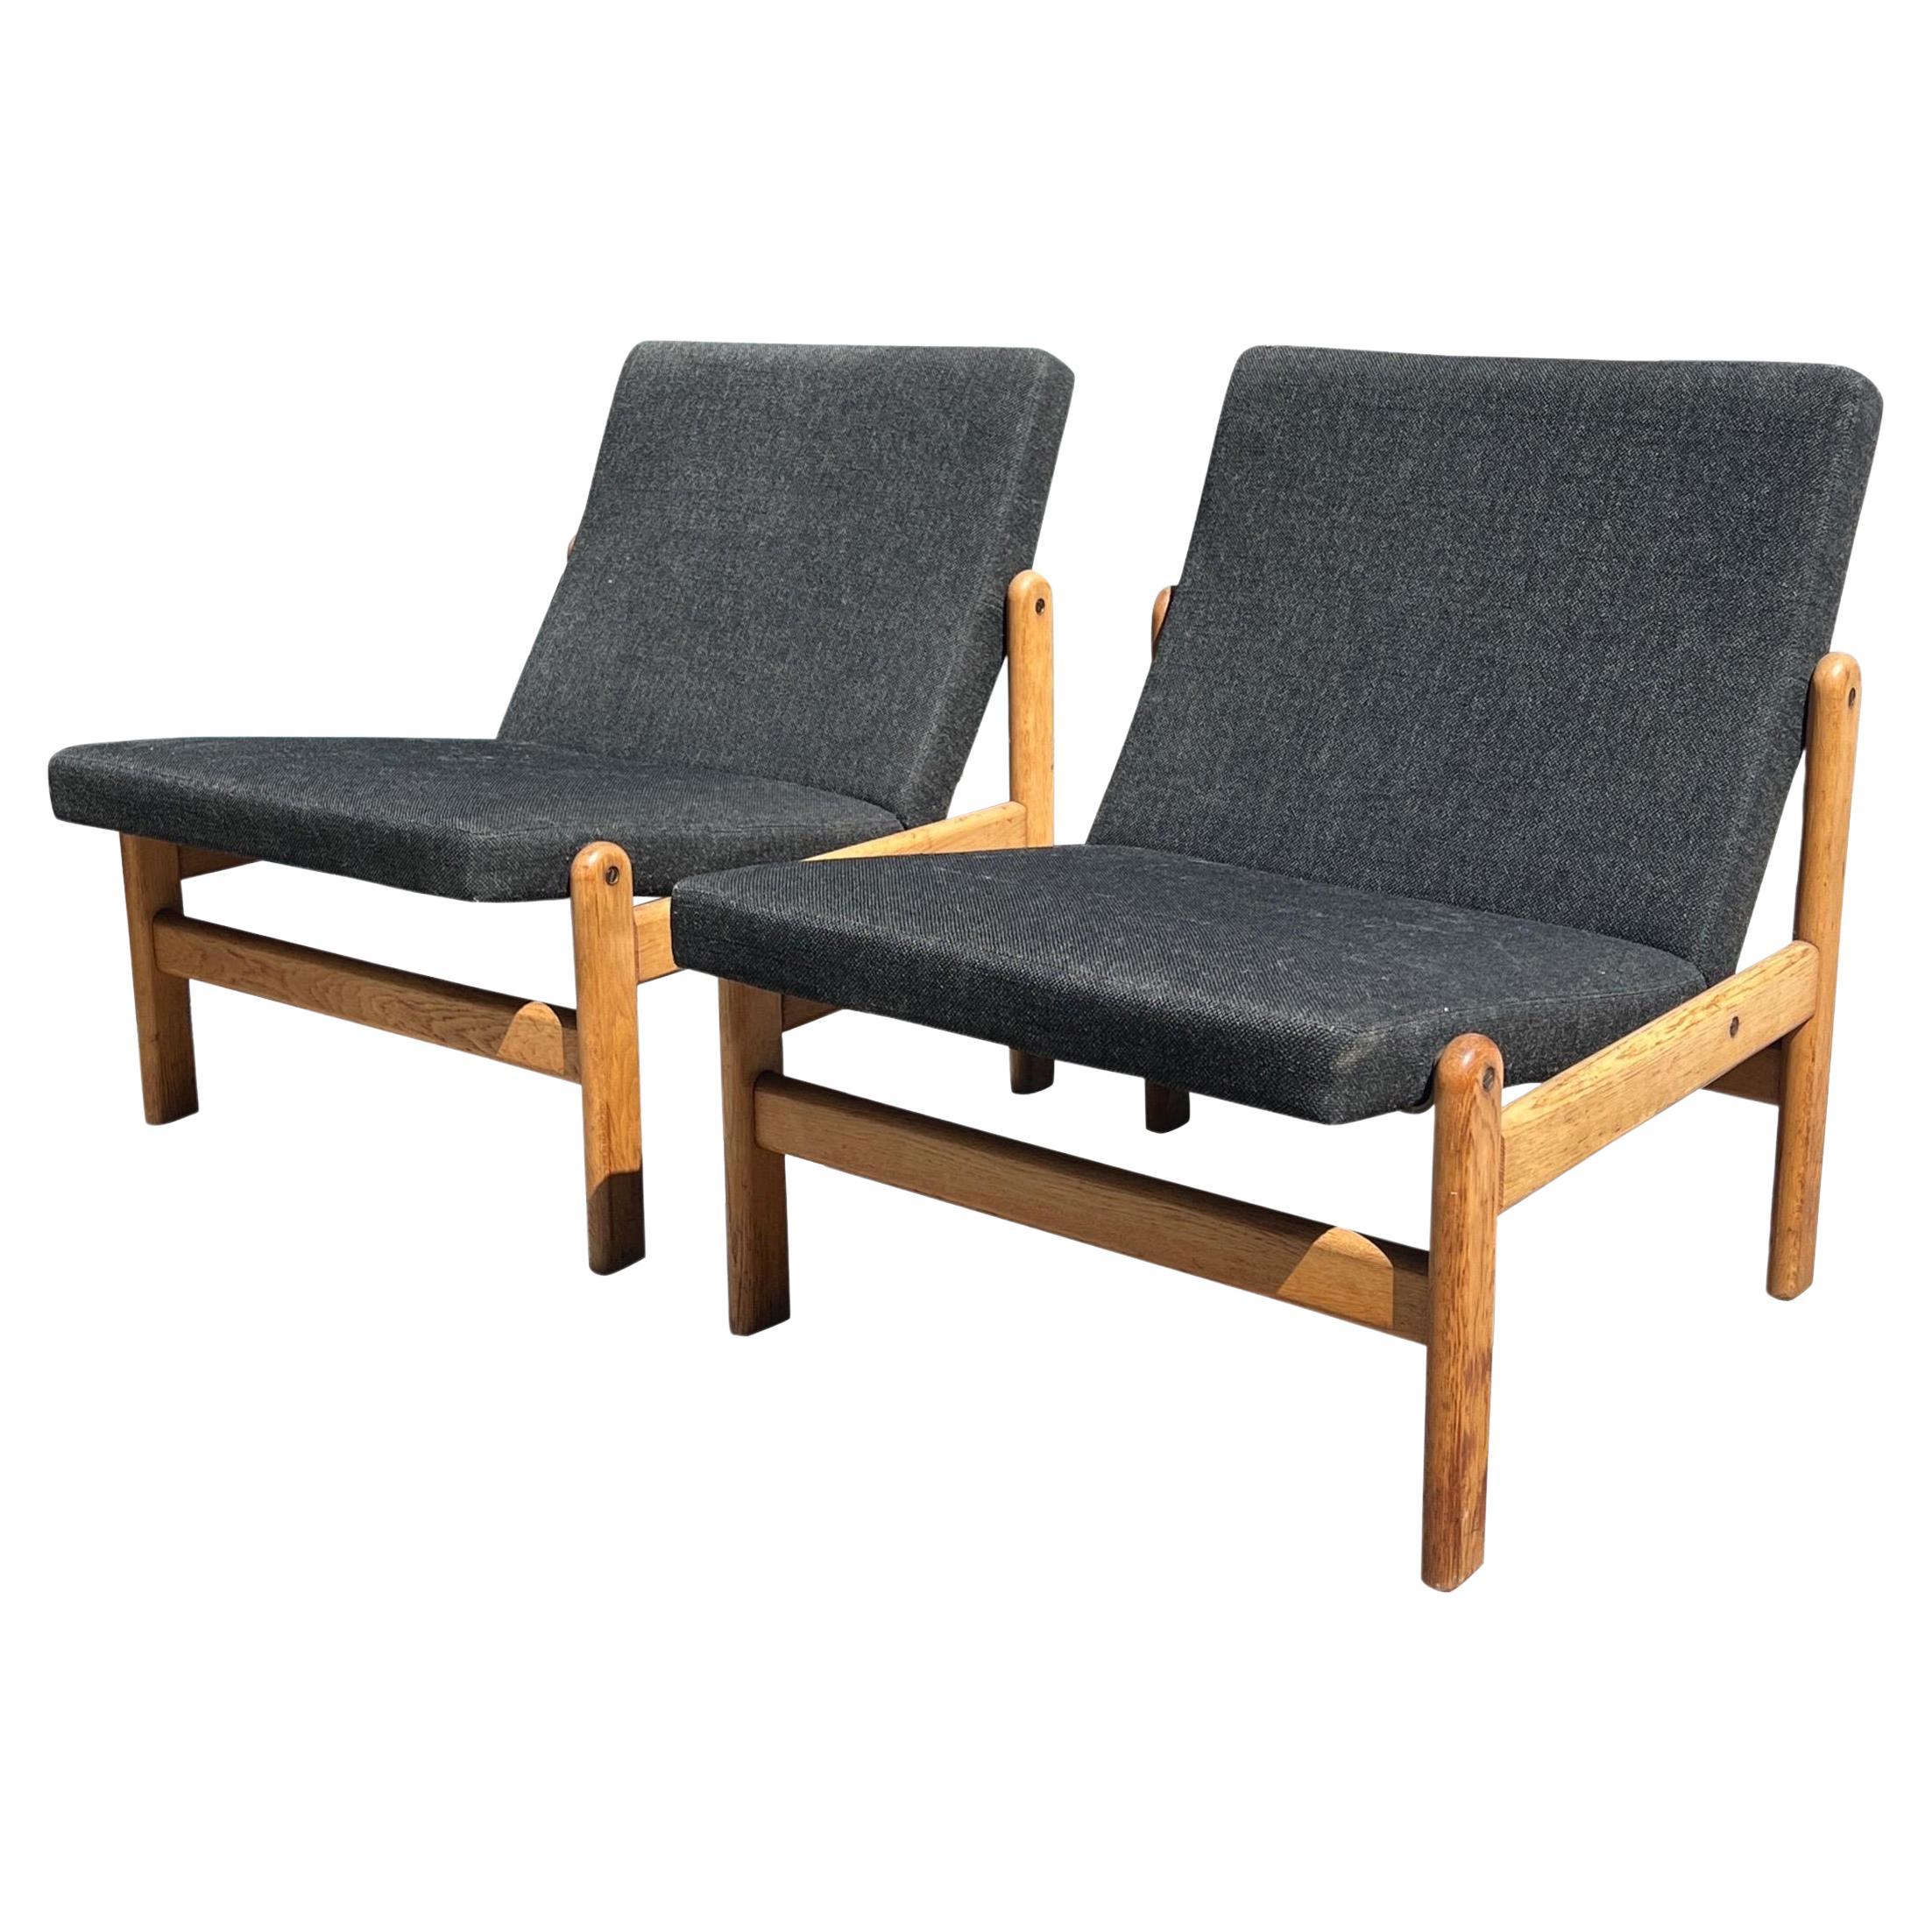 Jorgen Baeekmark Pair of Oak Slipper Lounge Chairs Danish Mid-Century Modern